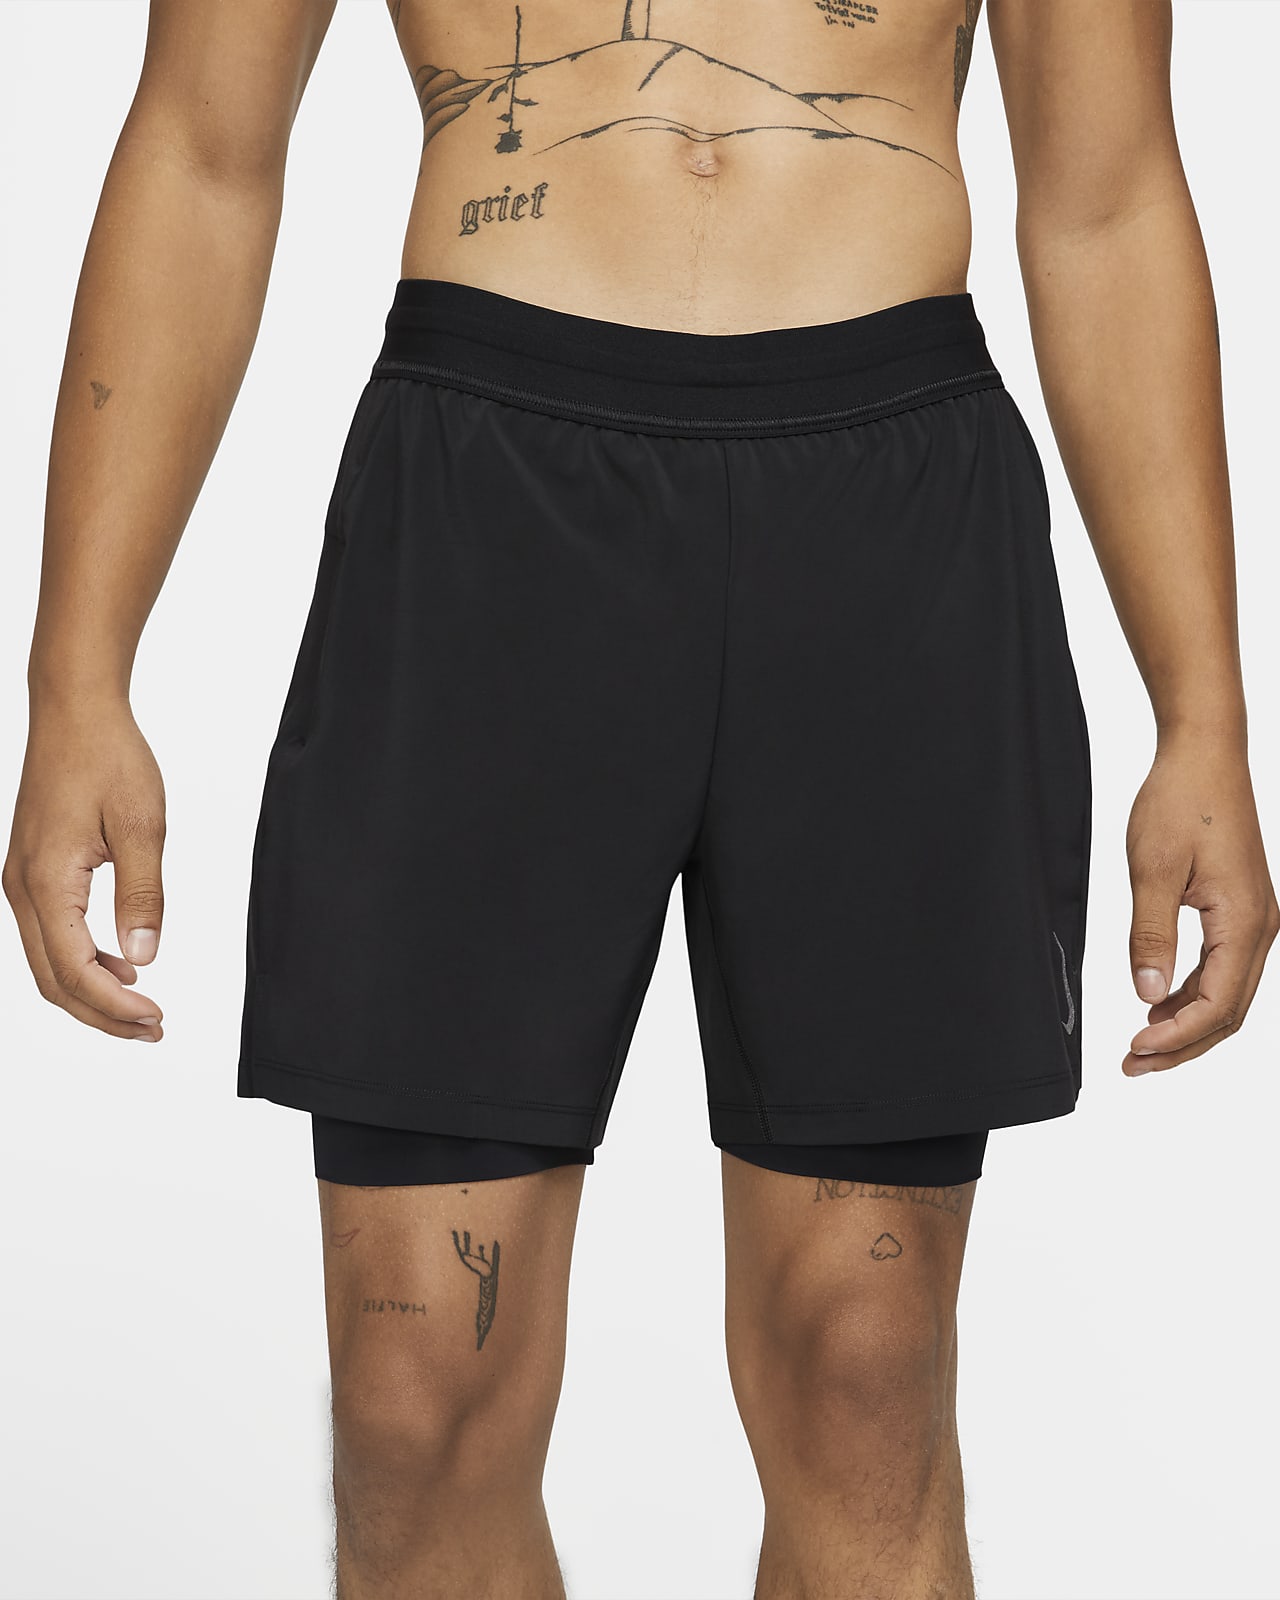 Men's running shorts, 2 in 1 Running compression shorts, training shorts,  yoga shorts, barre shorts, g…